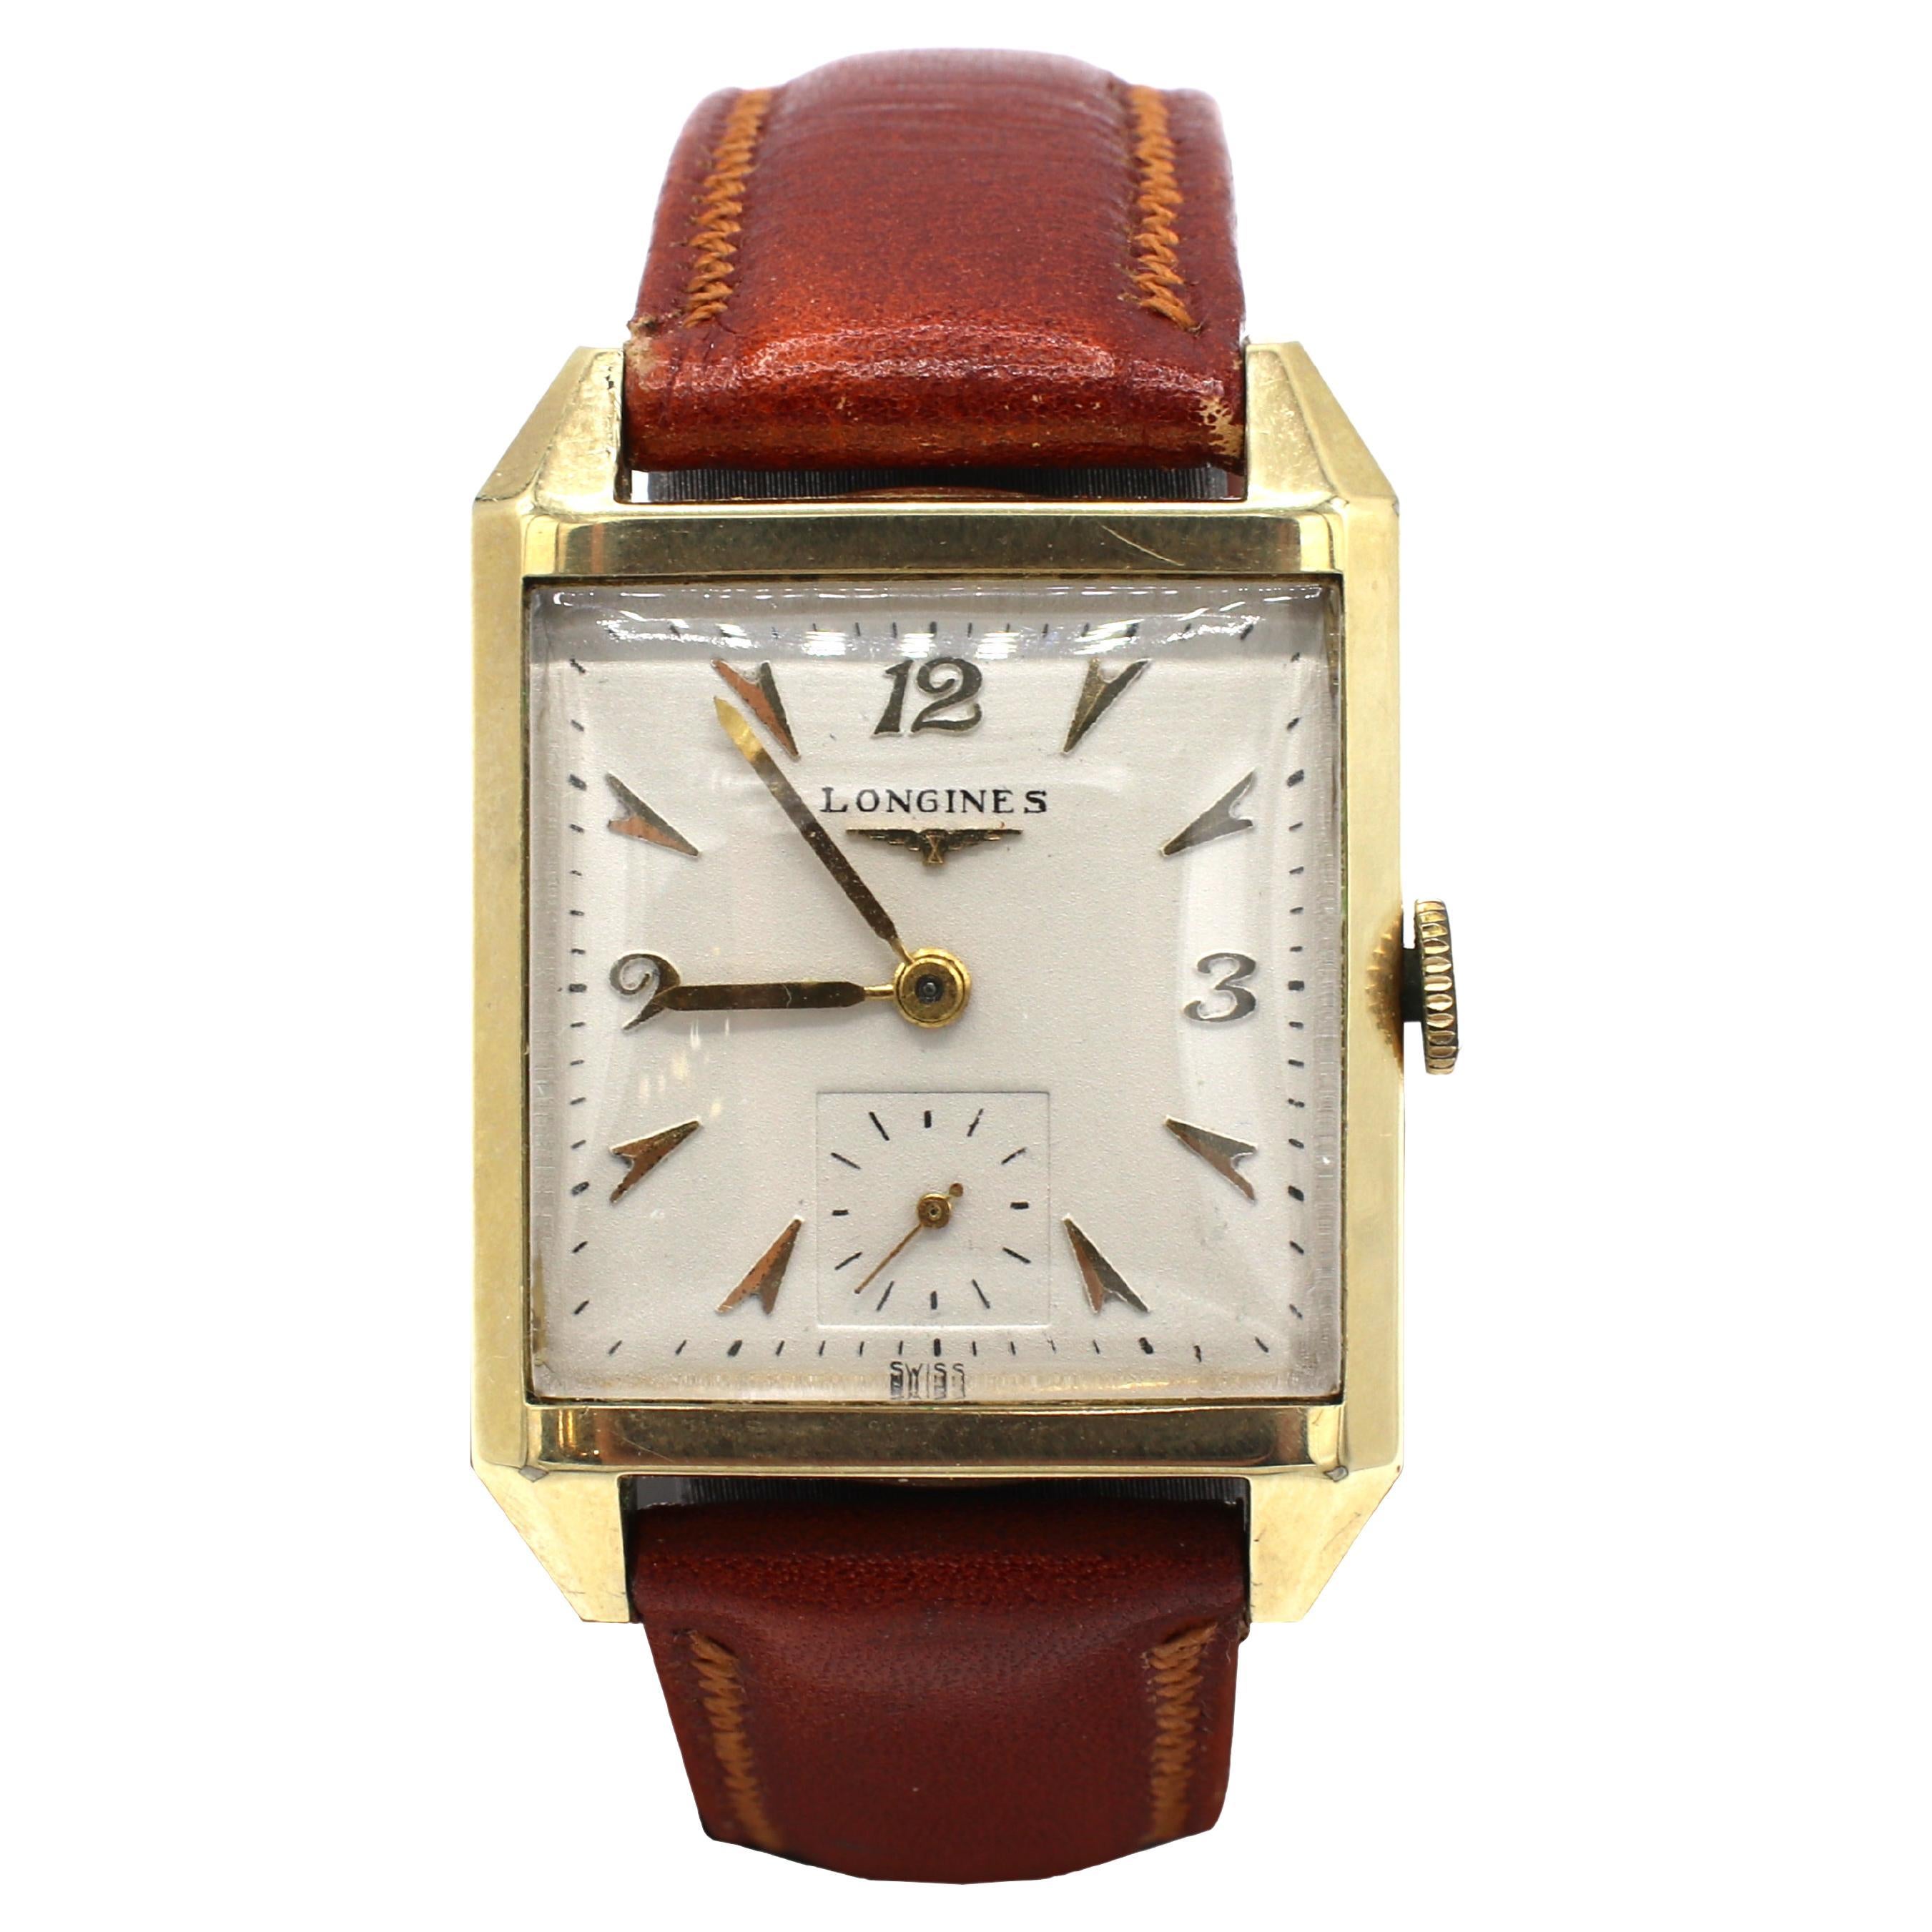 Longines 10K Gold Filled Manual Wind Tank Wrist Watch Leather Strap